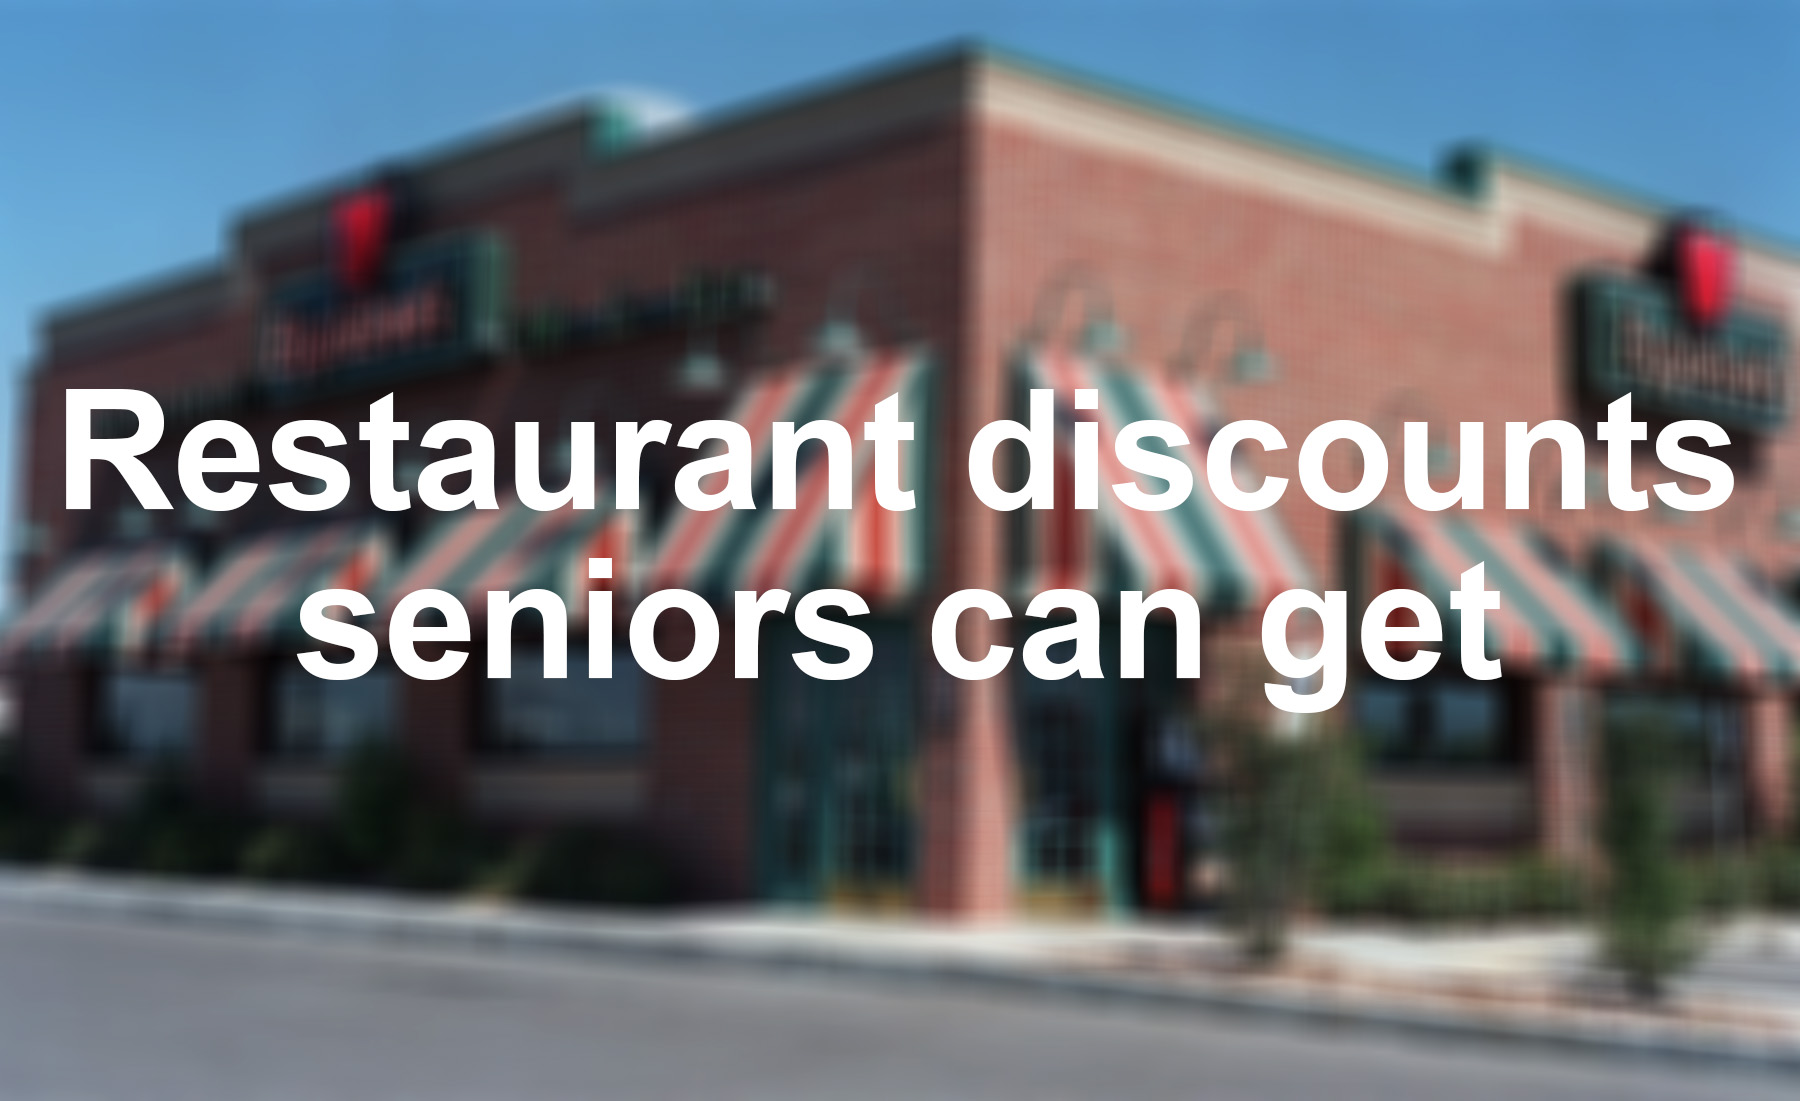 Restaurants' senior discounts